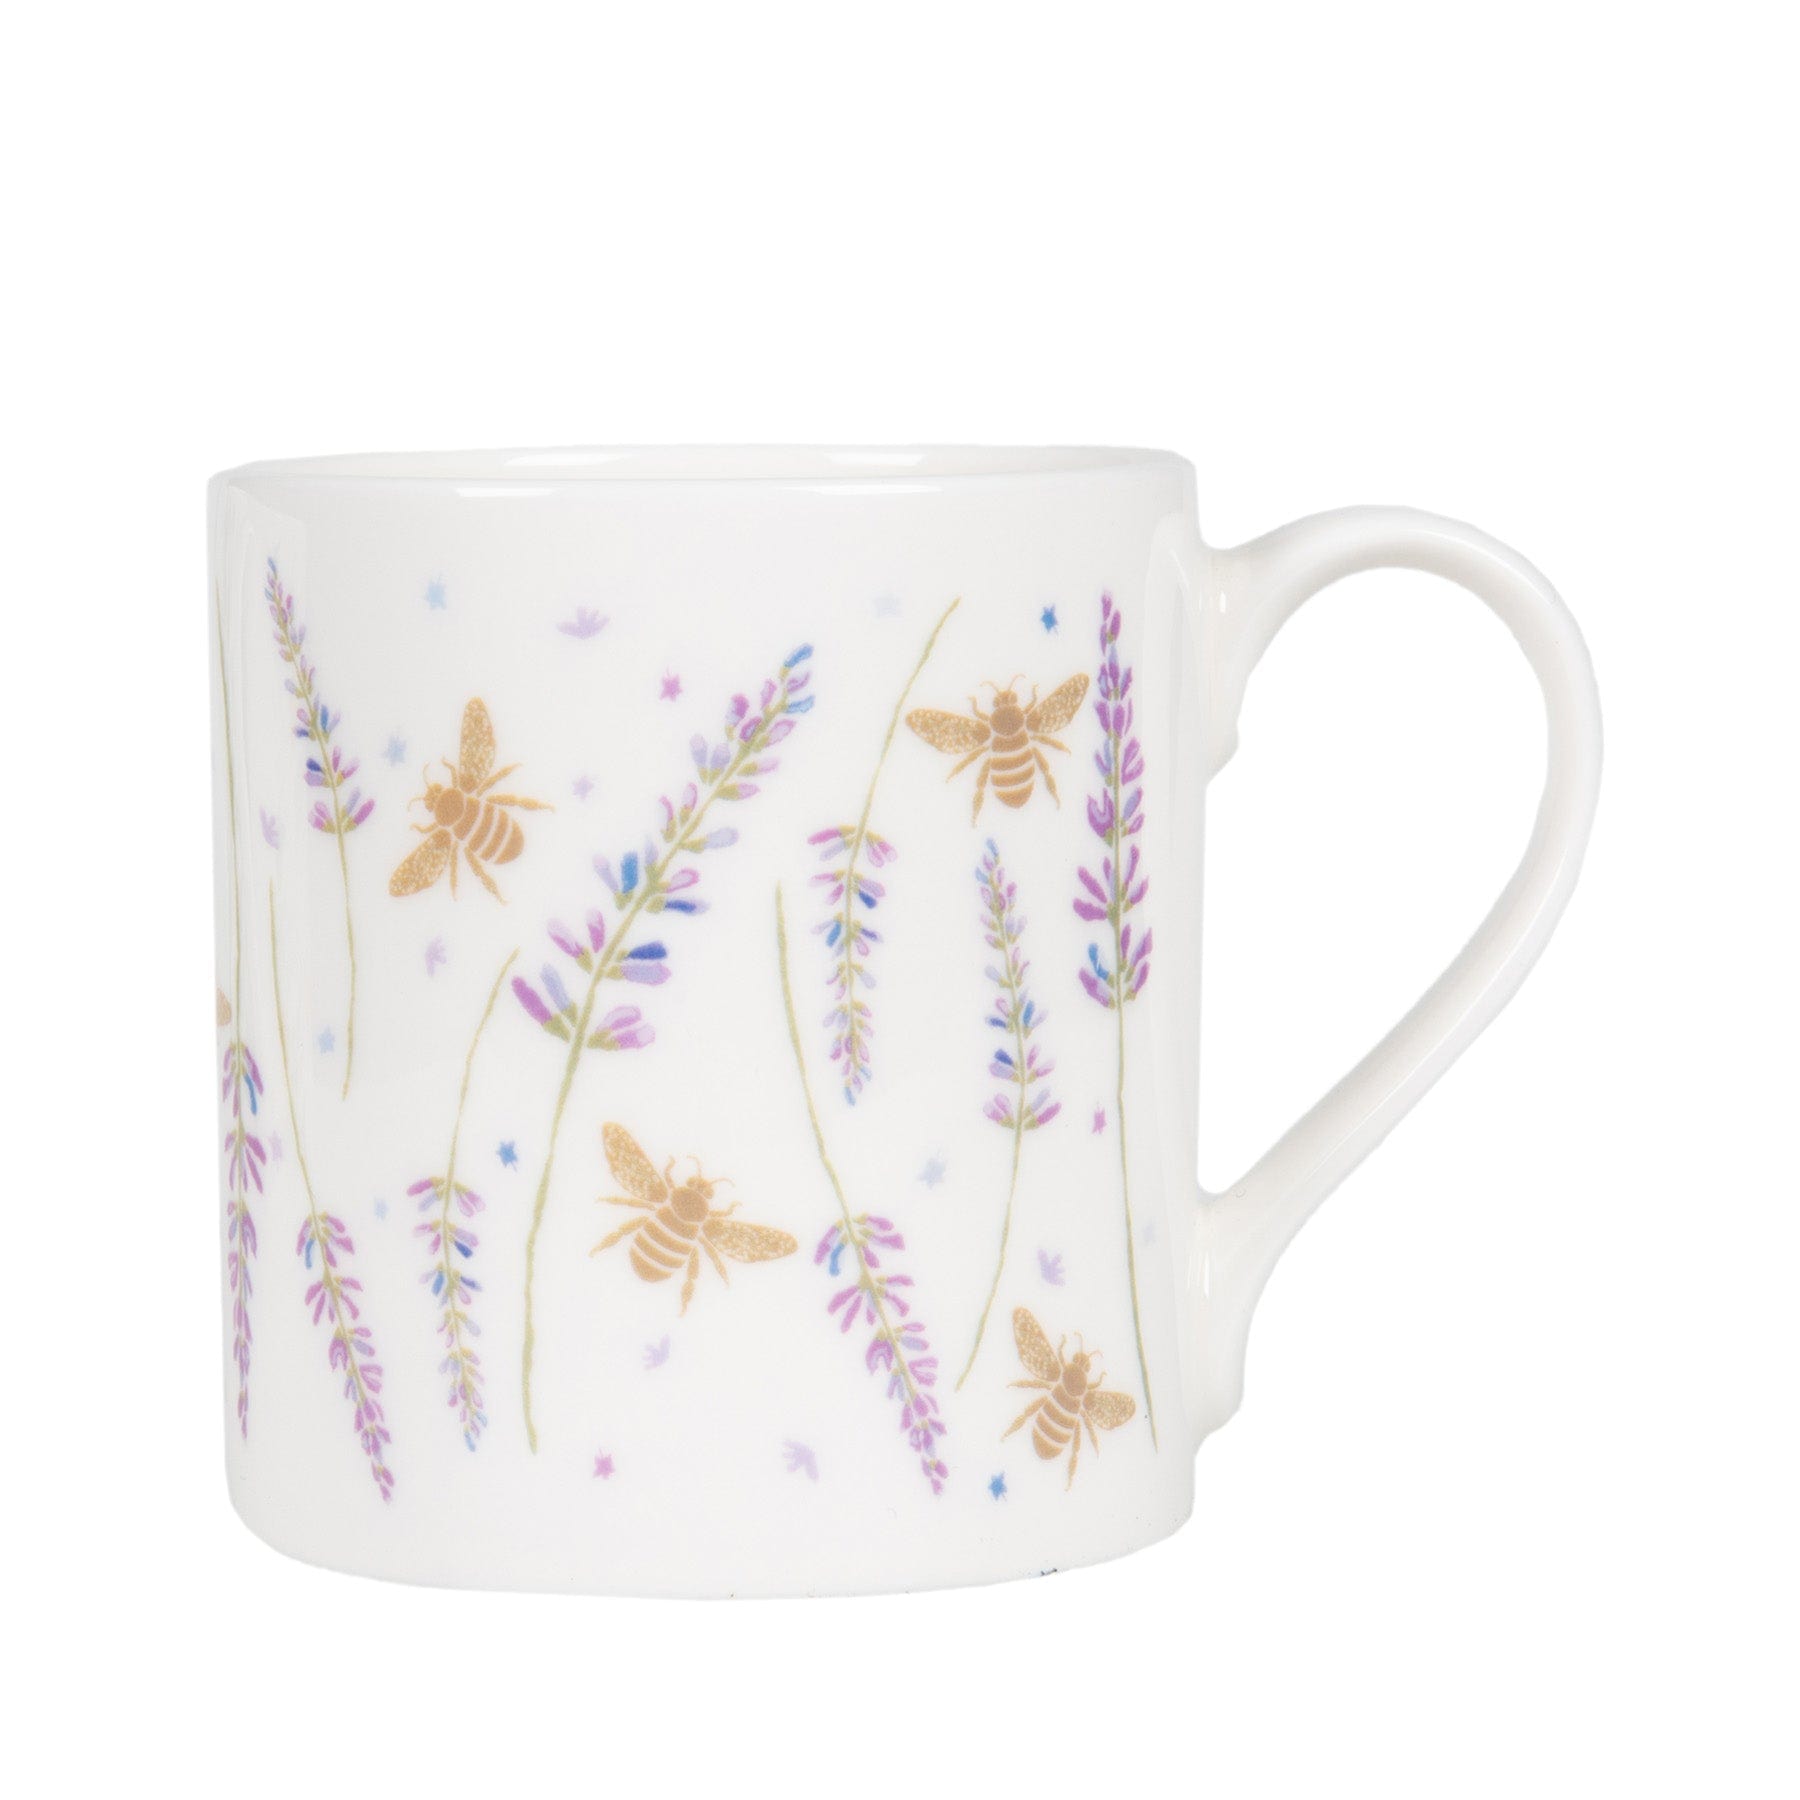 Lavender & bees print mug